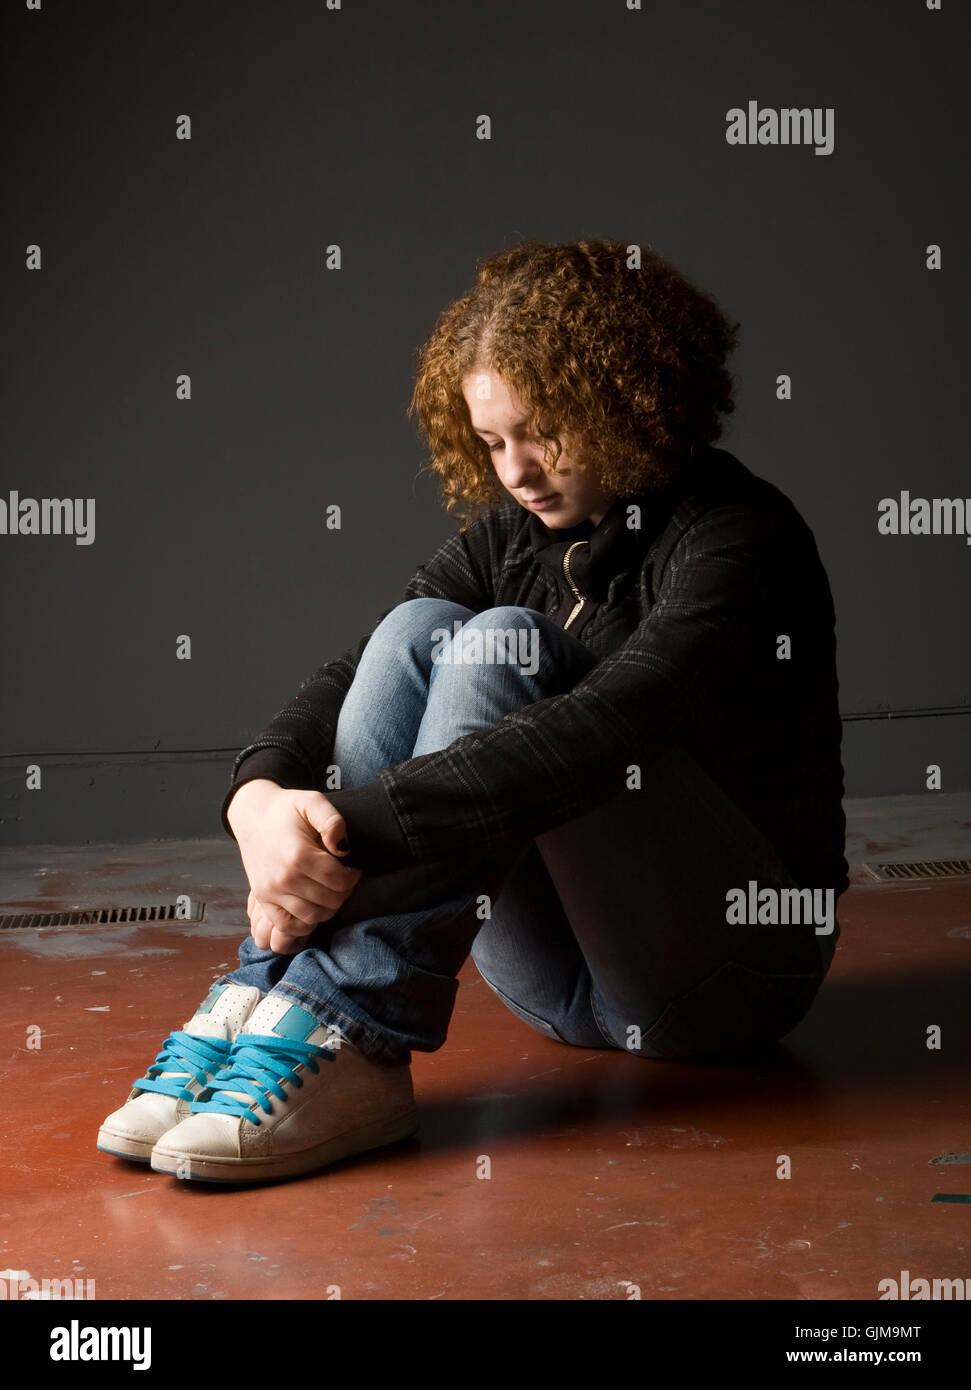 depression abuse contemplating Stock Photo - Alamy